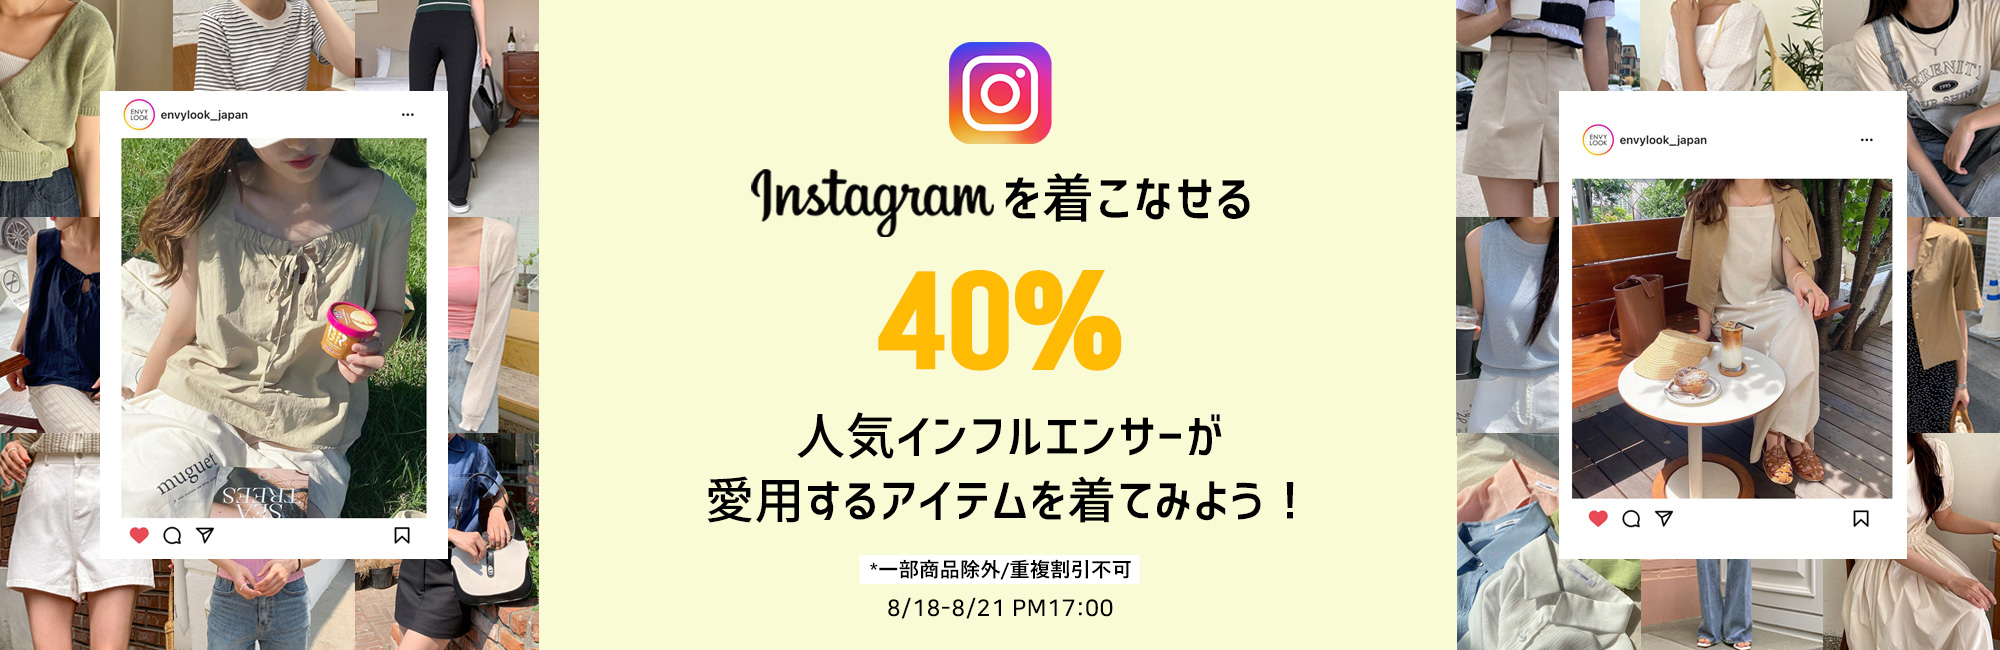 Instagramを着こなせる 40%